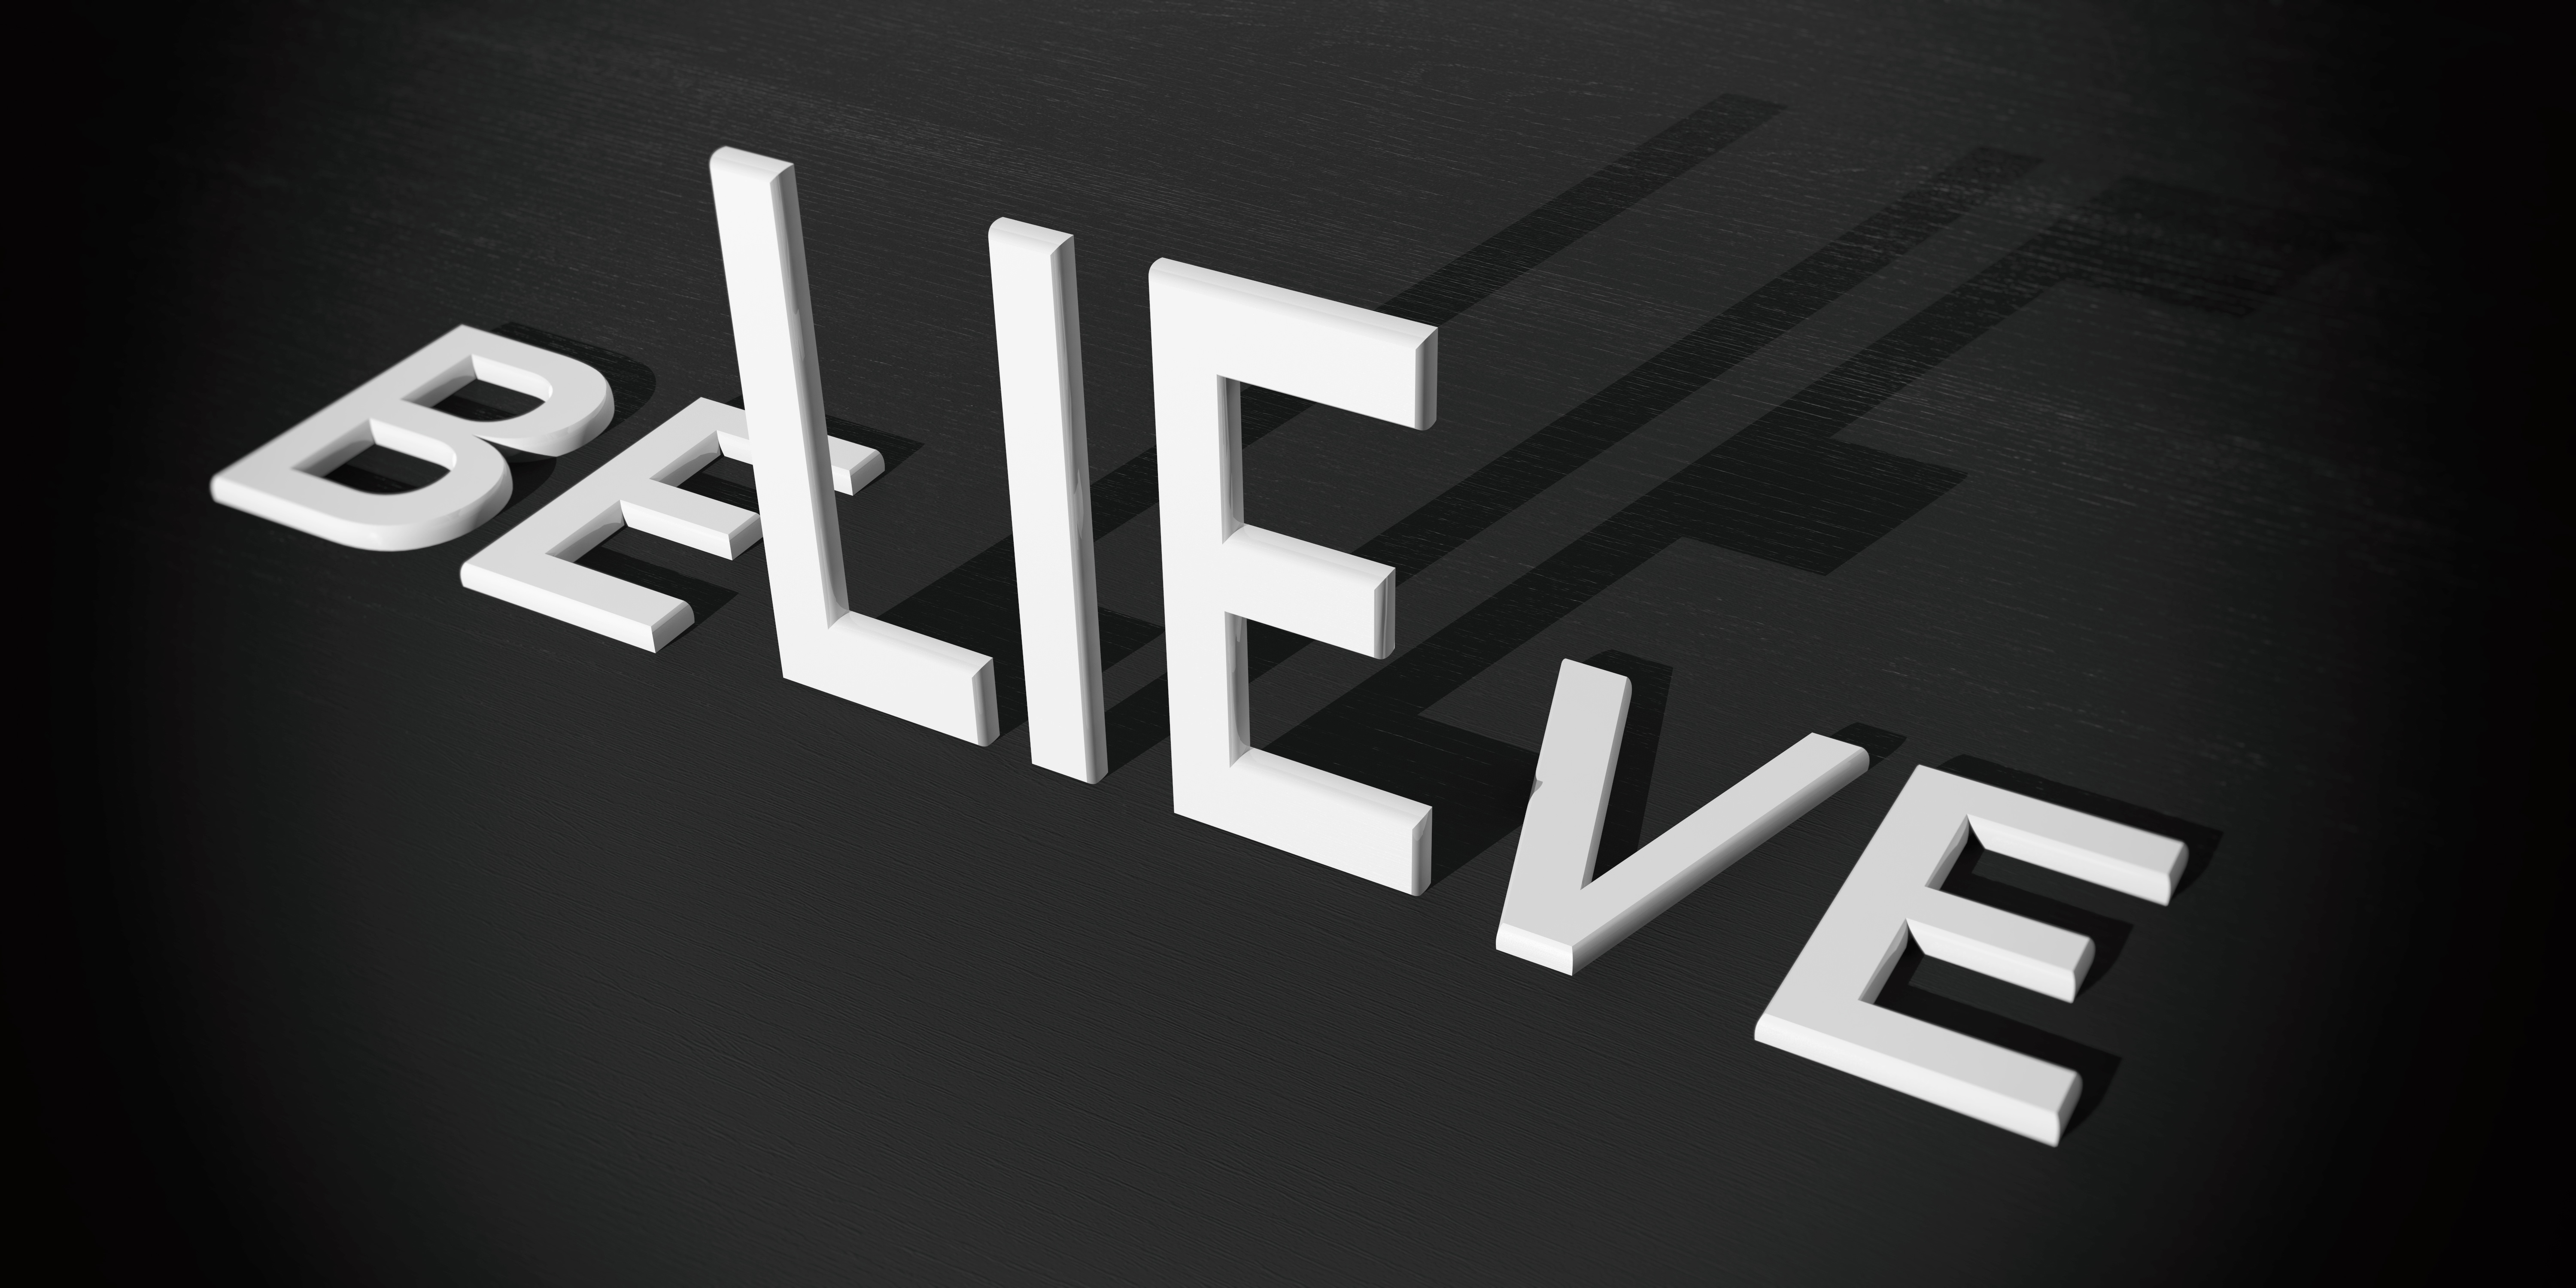 3d rendering words lie and believe